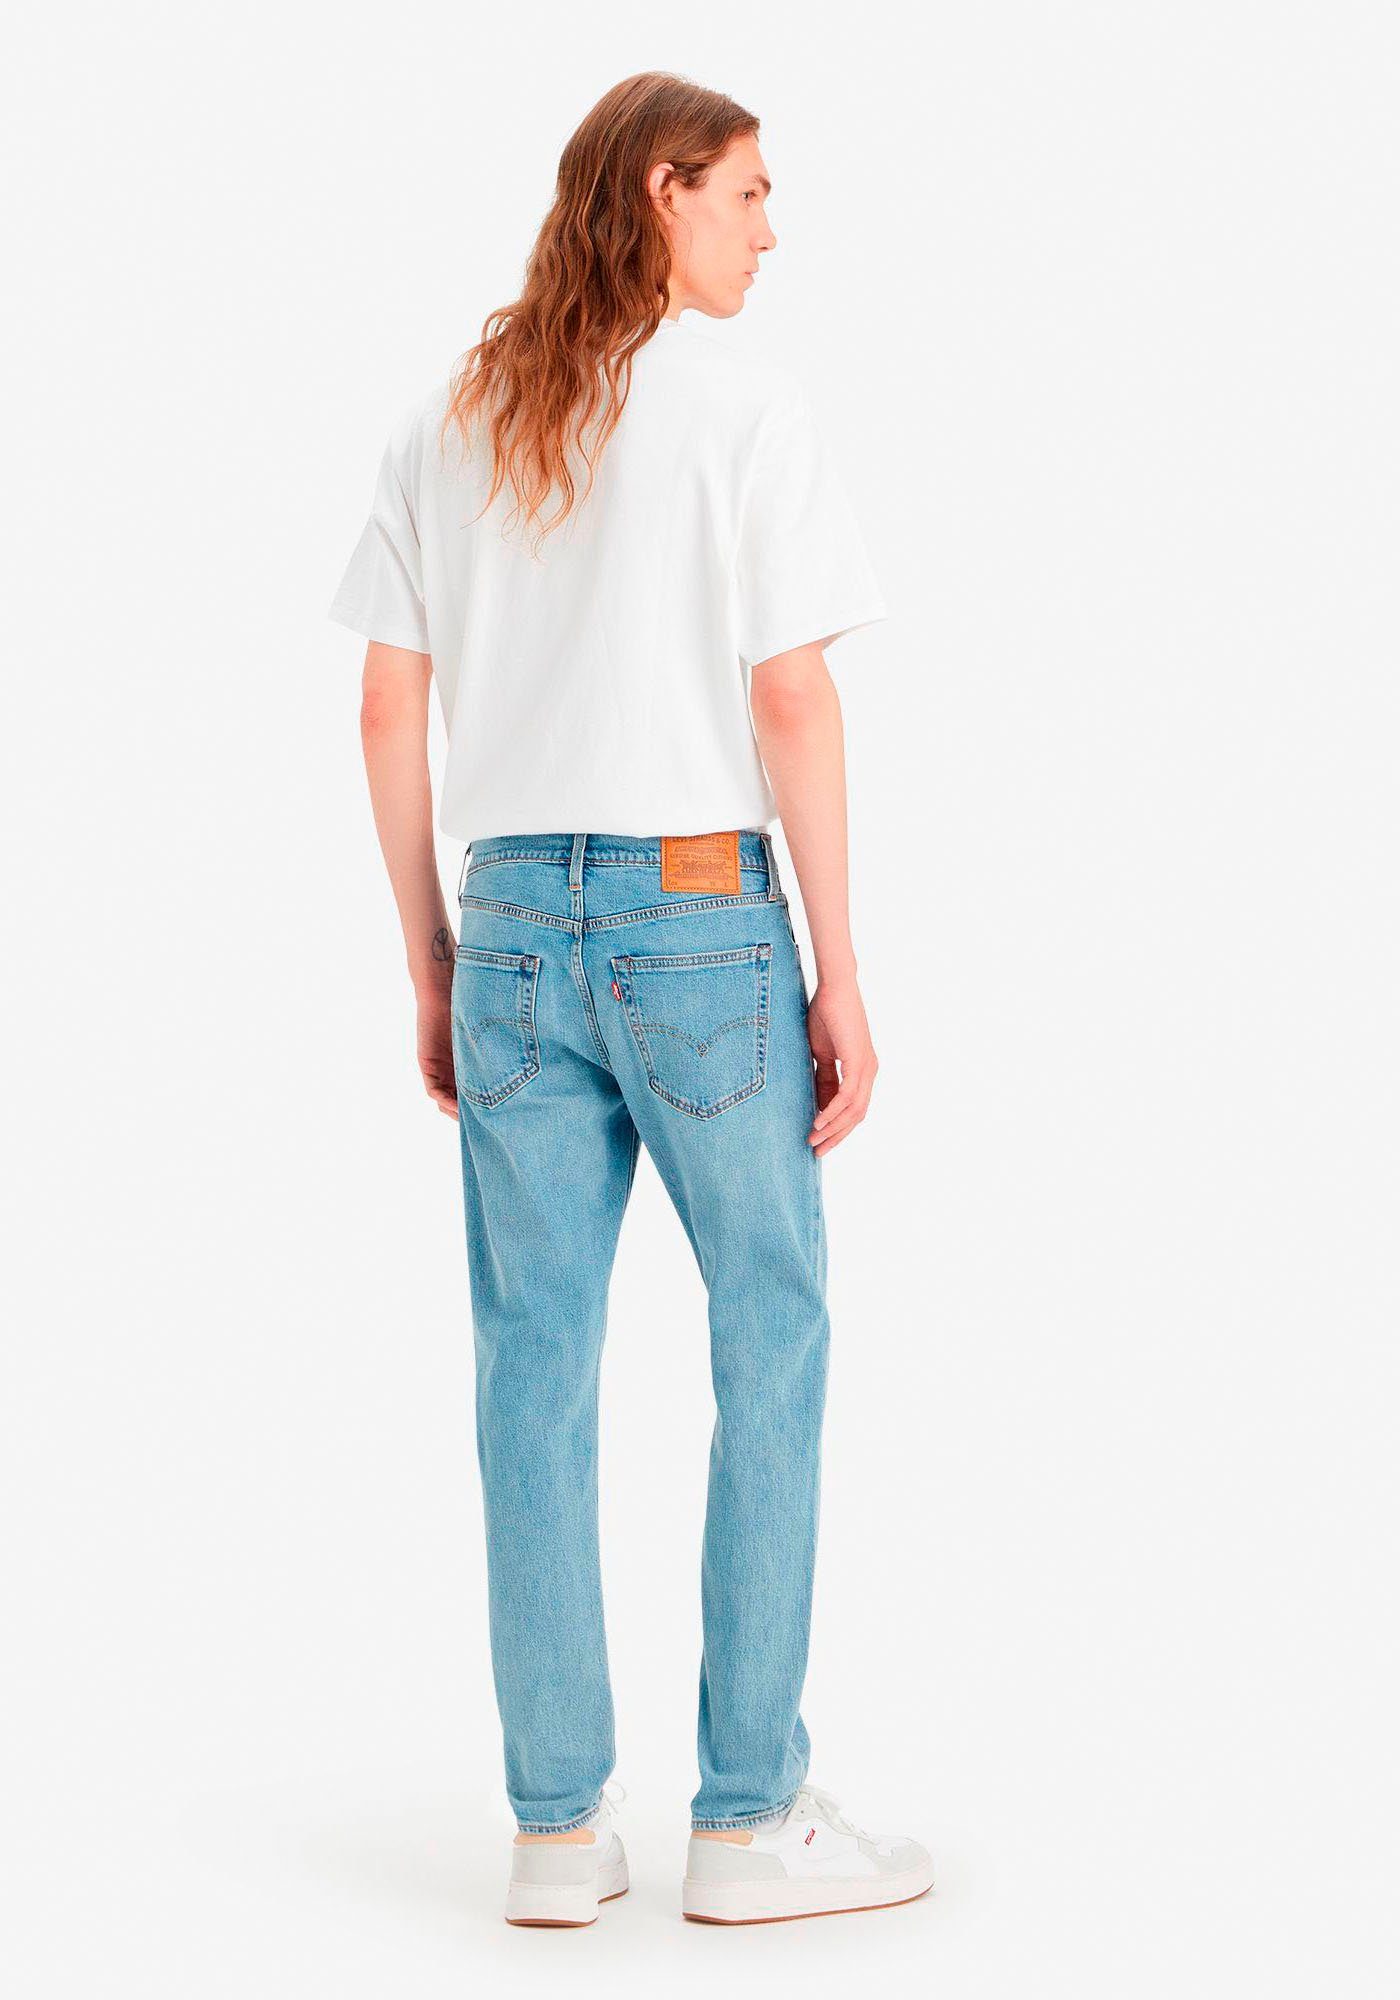 Levi's Tapered jeans 512 Slim Taper Fit